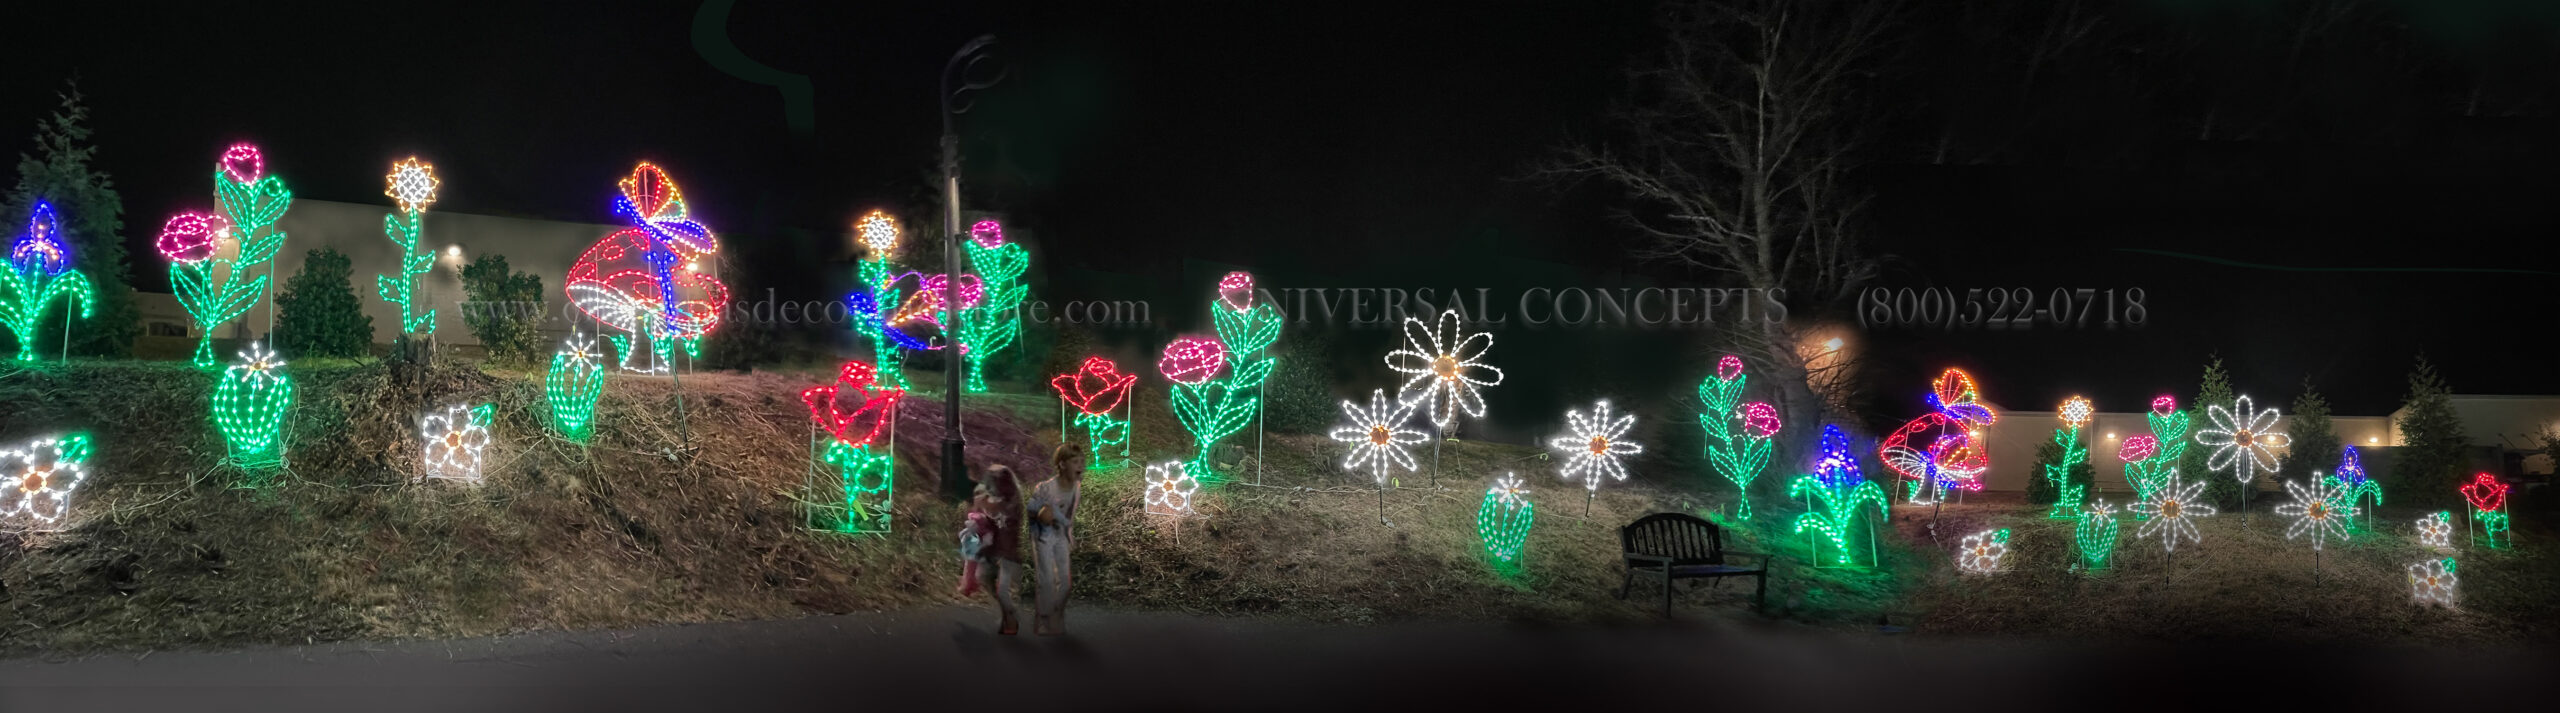 LED lighted botanical displays light up a lawn